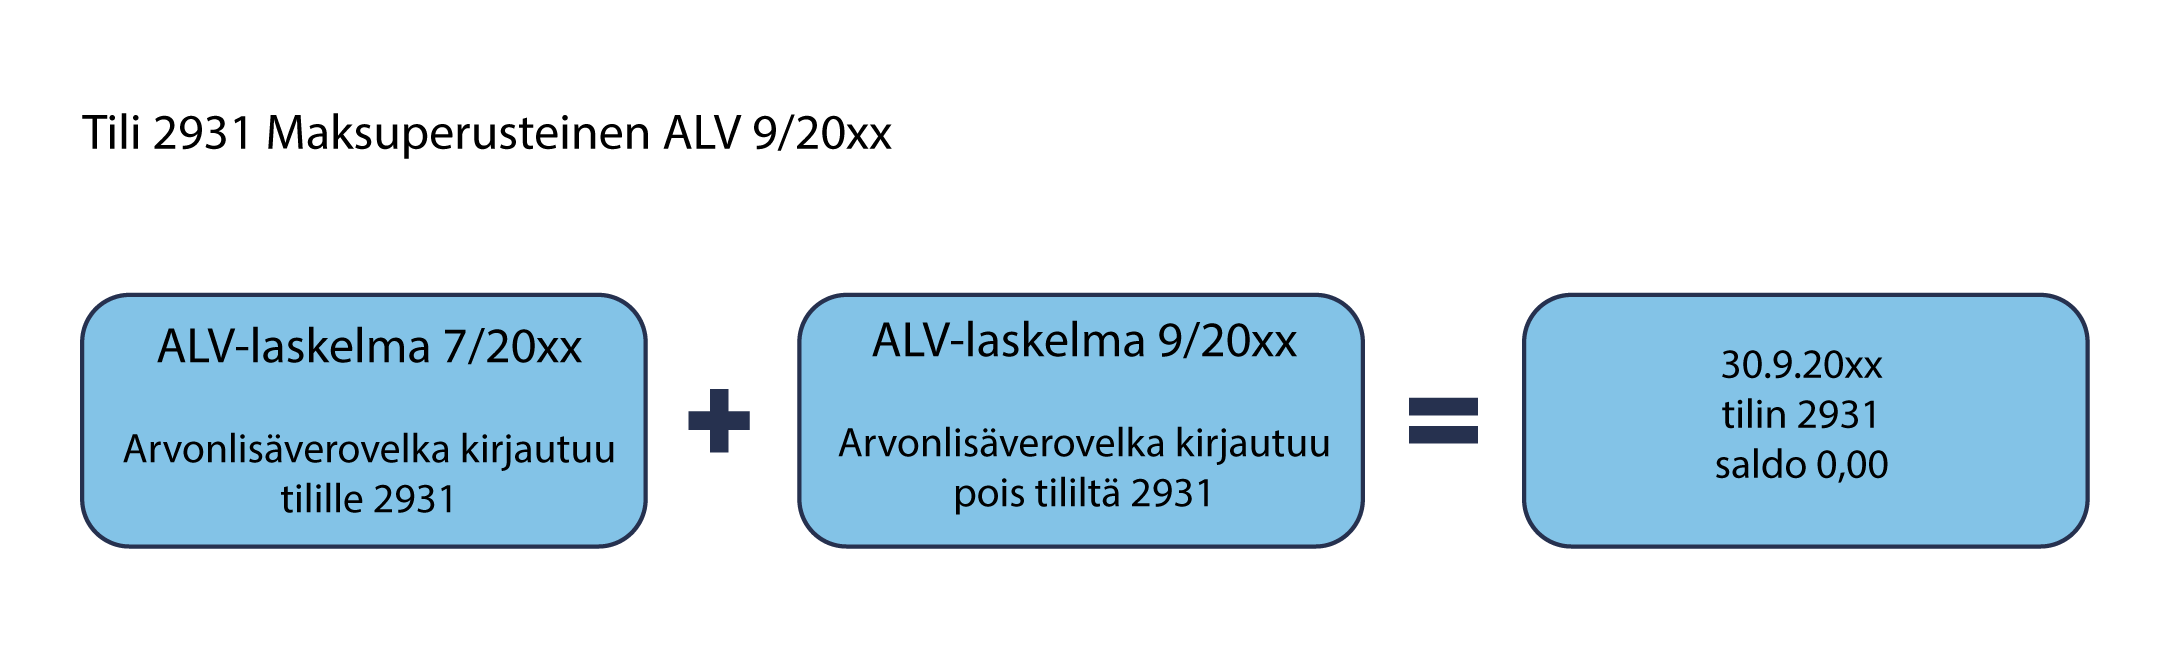 Maksuperusteinen_Tili_2931_maksuperusteinen_ALV_9-20xx.png